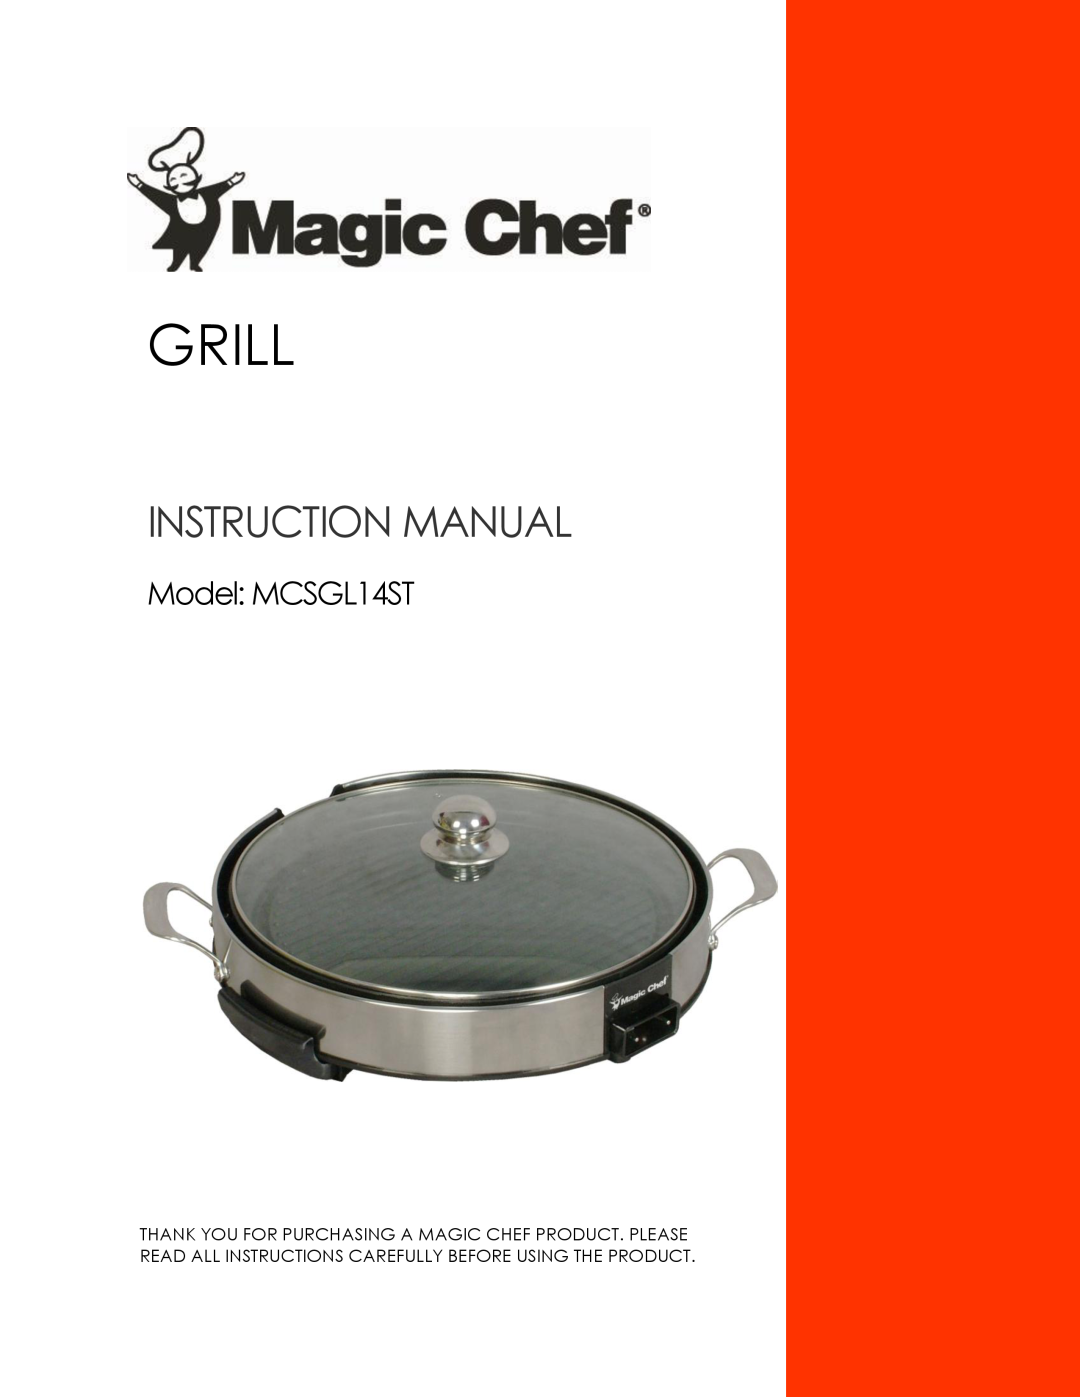 Magic Chef instruction manual Grill, Model MCSGL14ST 